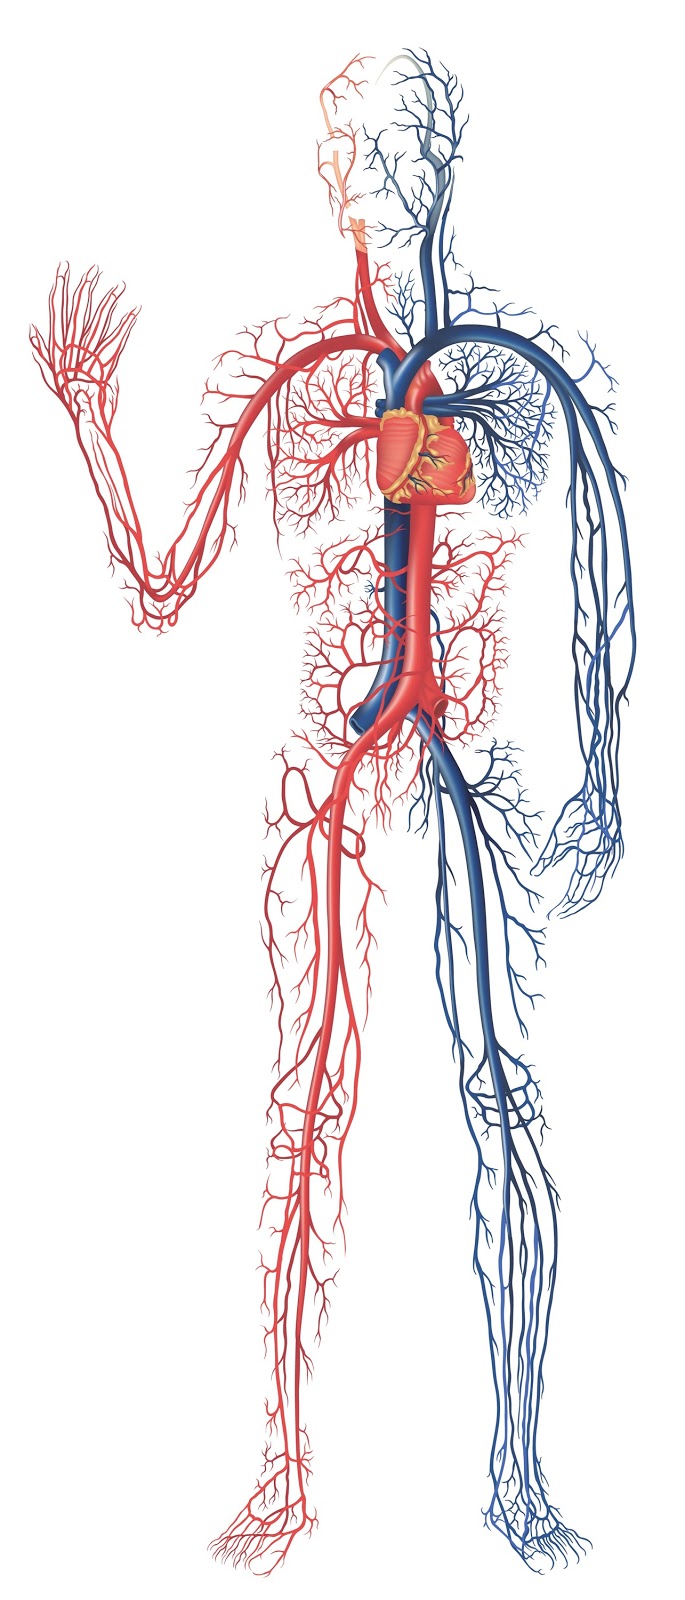 Digestive system of human body: Human Circulatory System Unlabeled Diagram